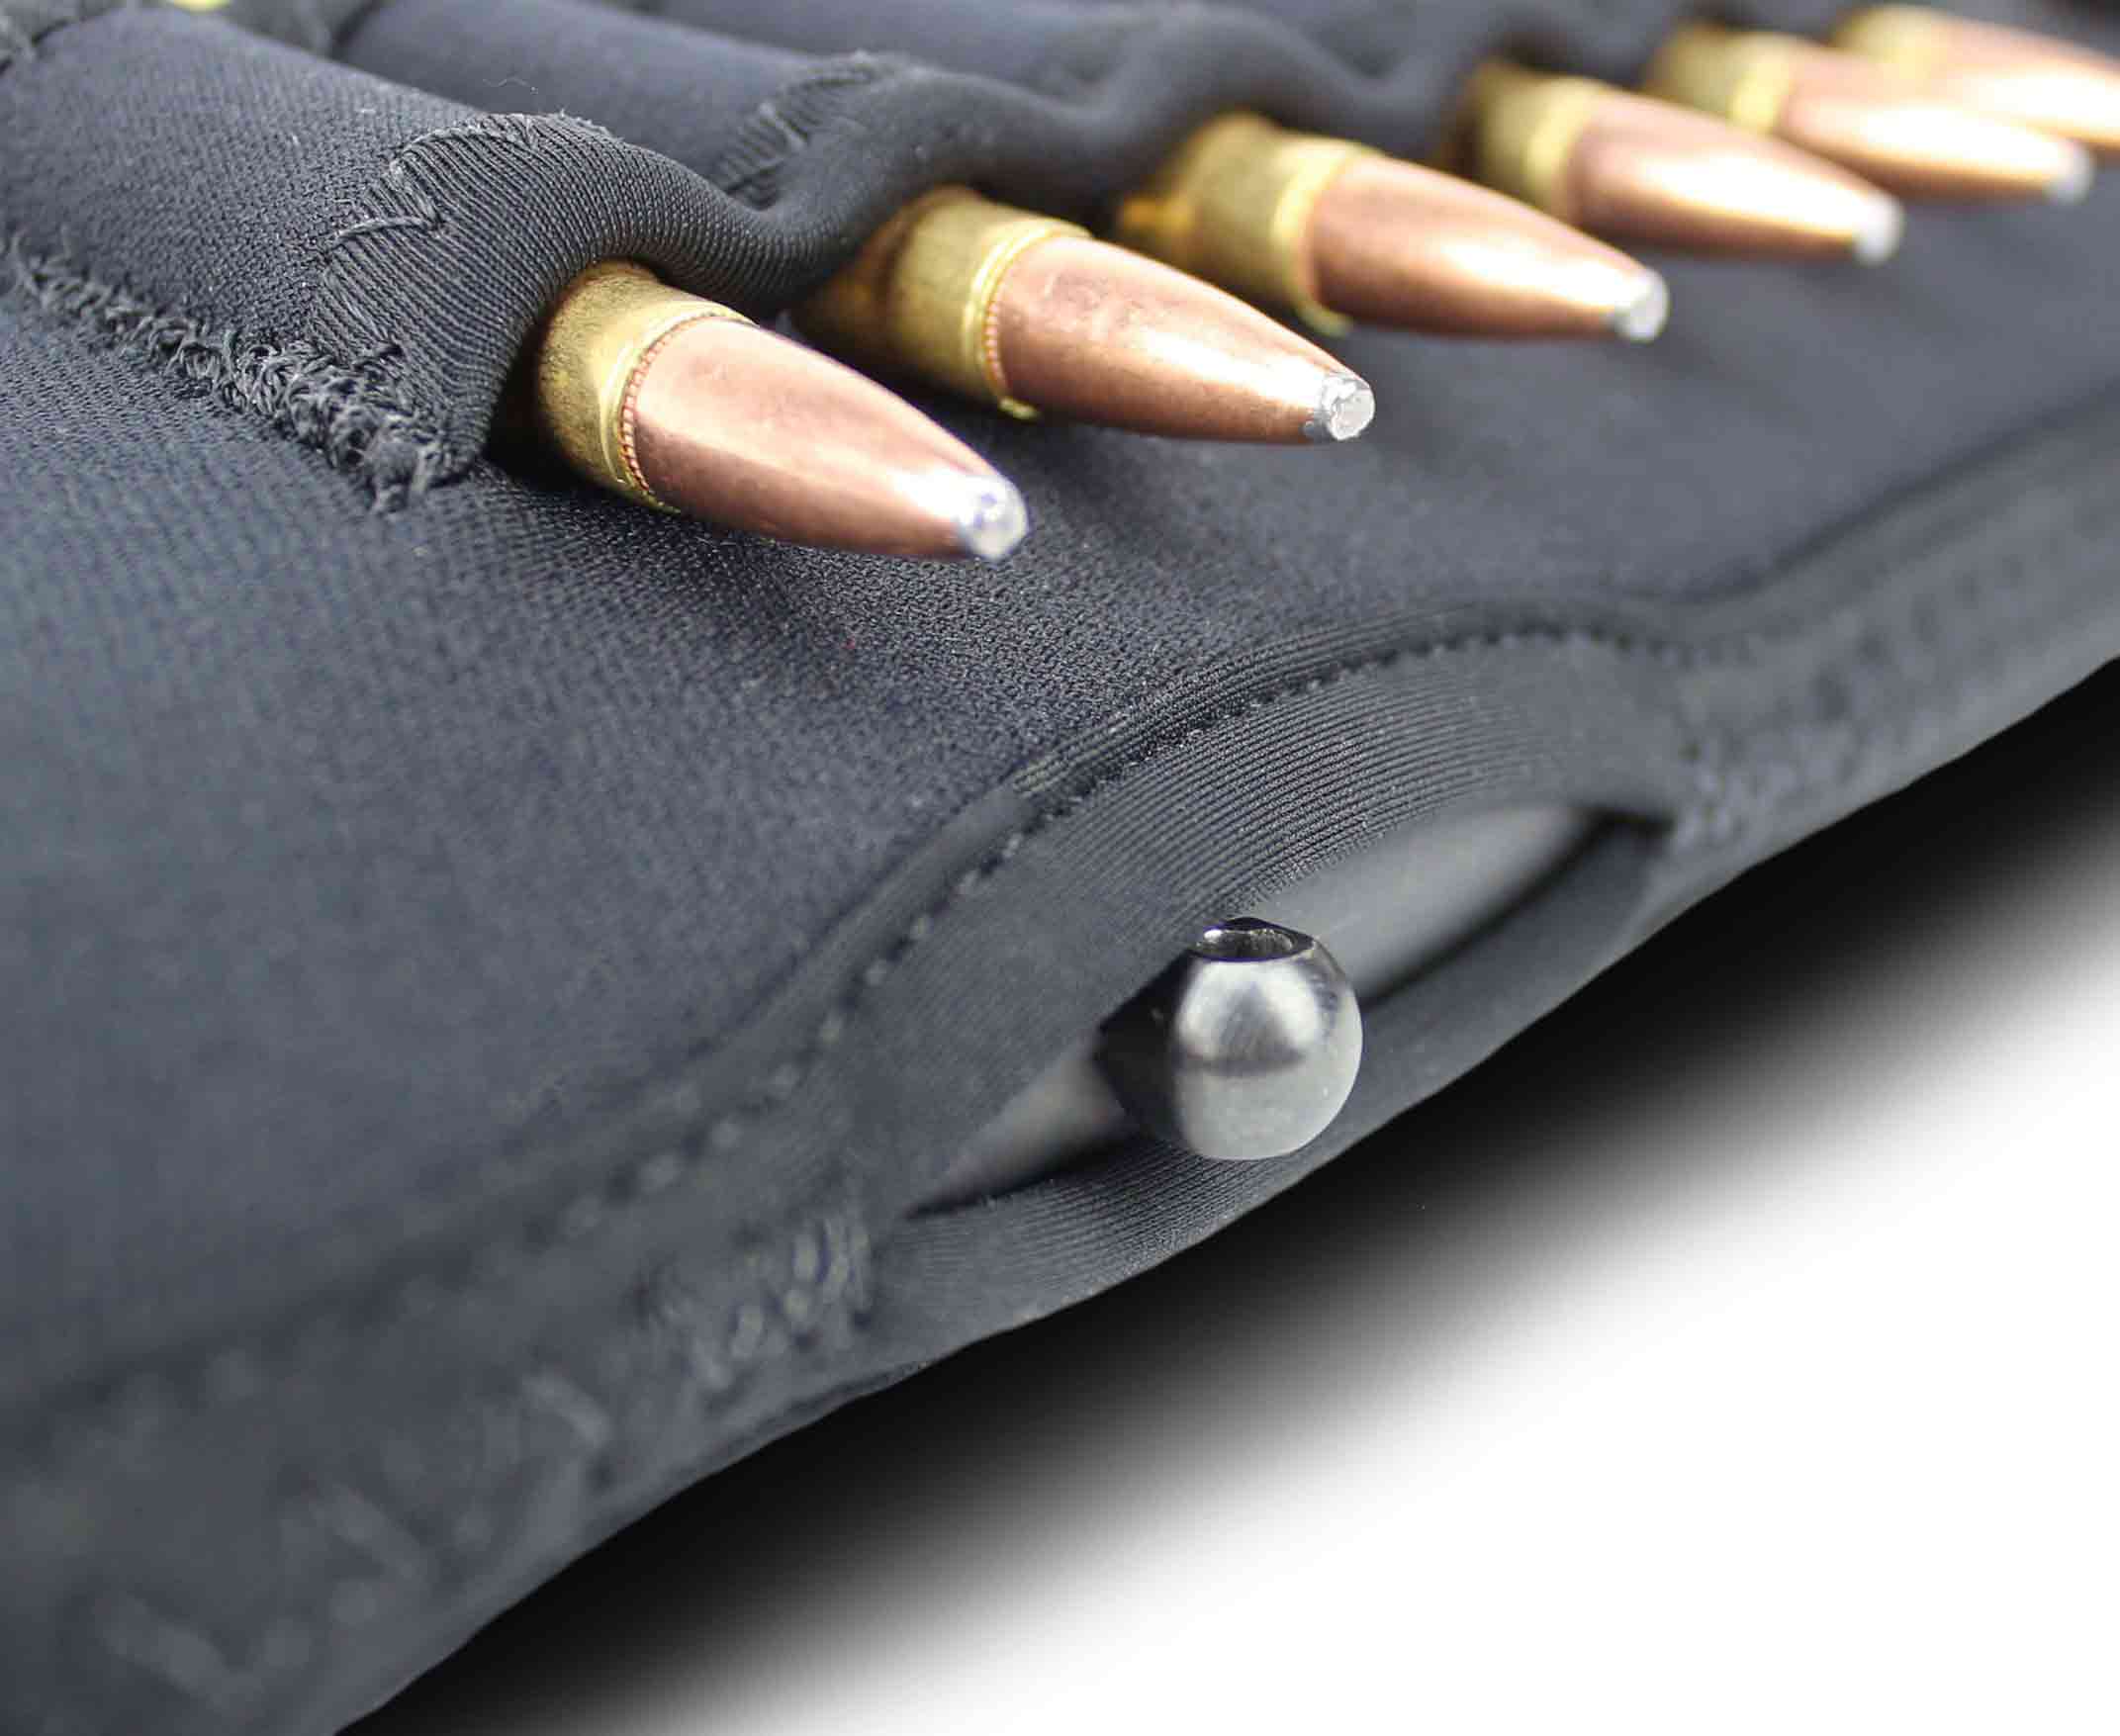 Beartooth Coussin ANTI-RECUL Kit à enfiler POUR ARMES TIR & Fusils Noir 